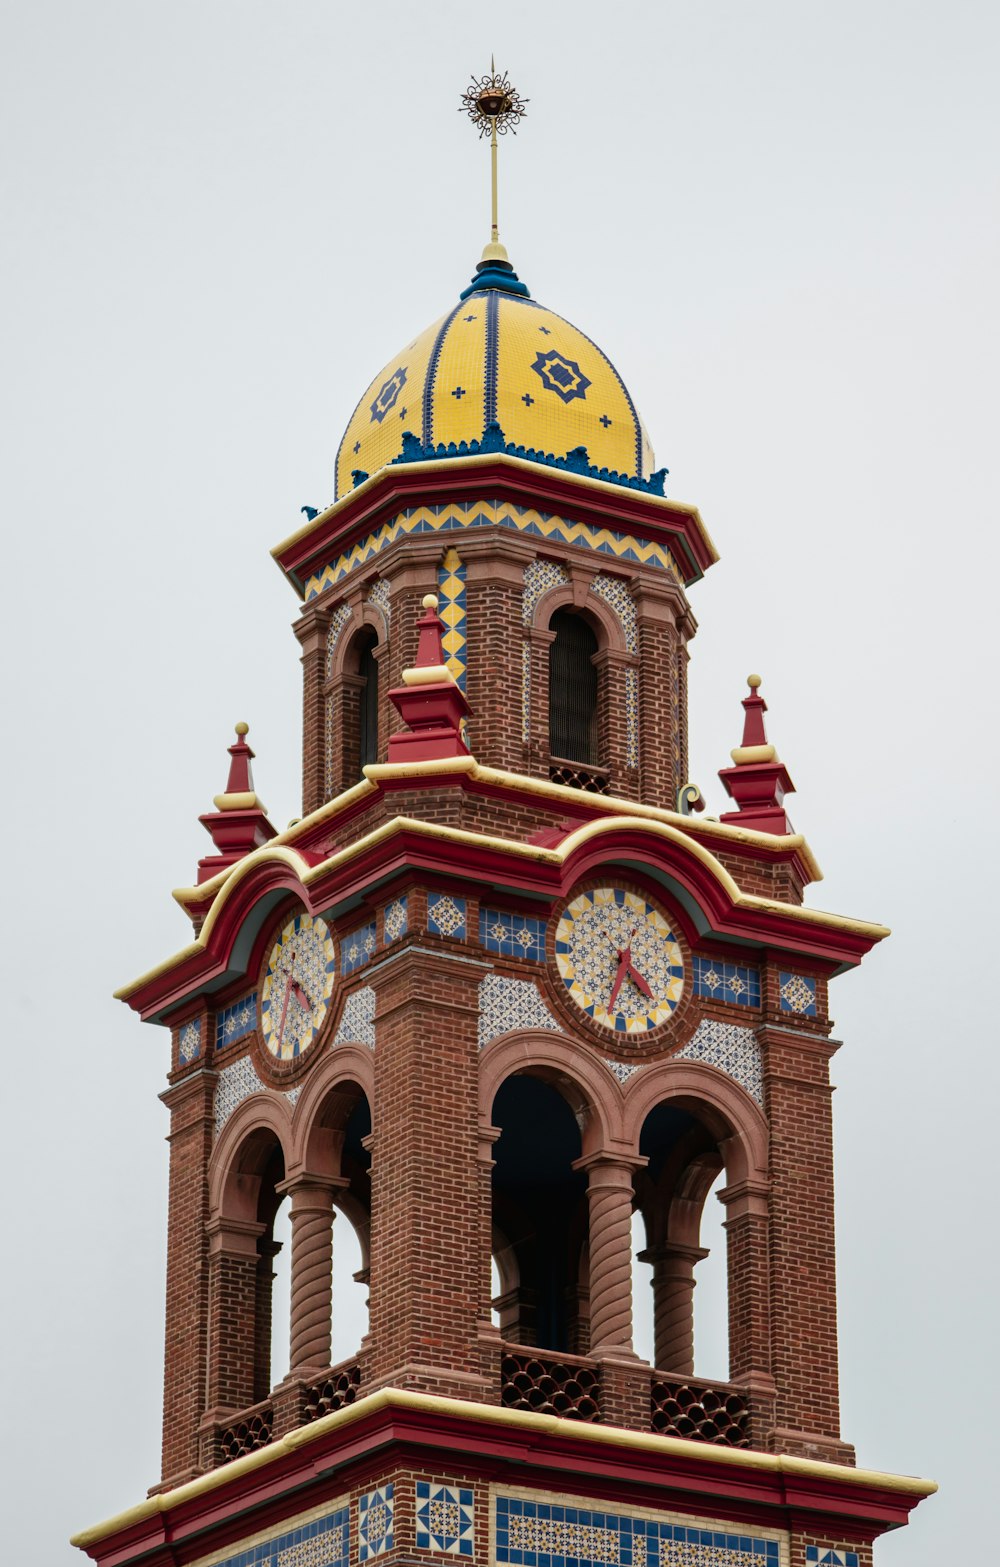 brown tower clock under white sky